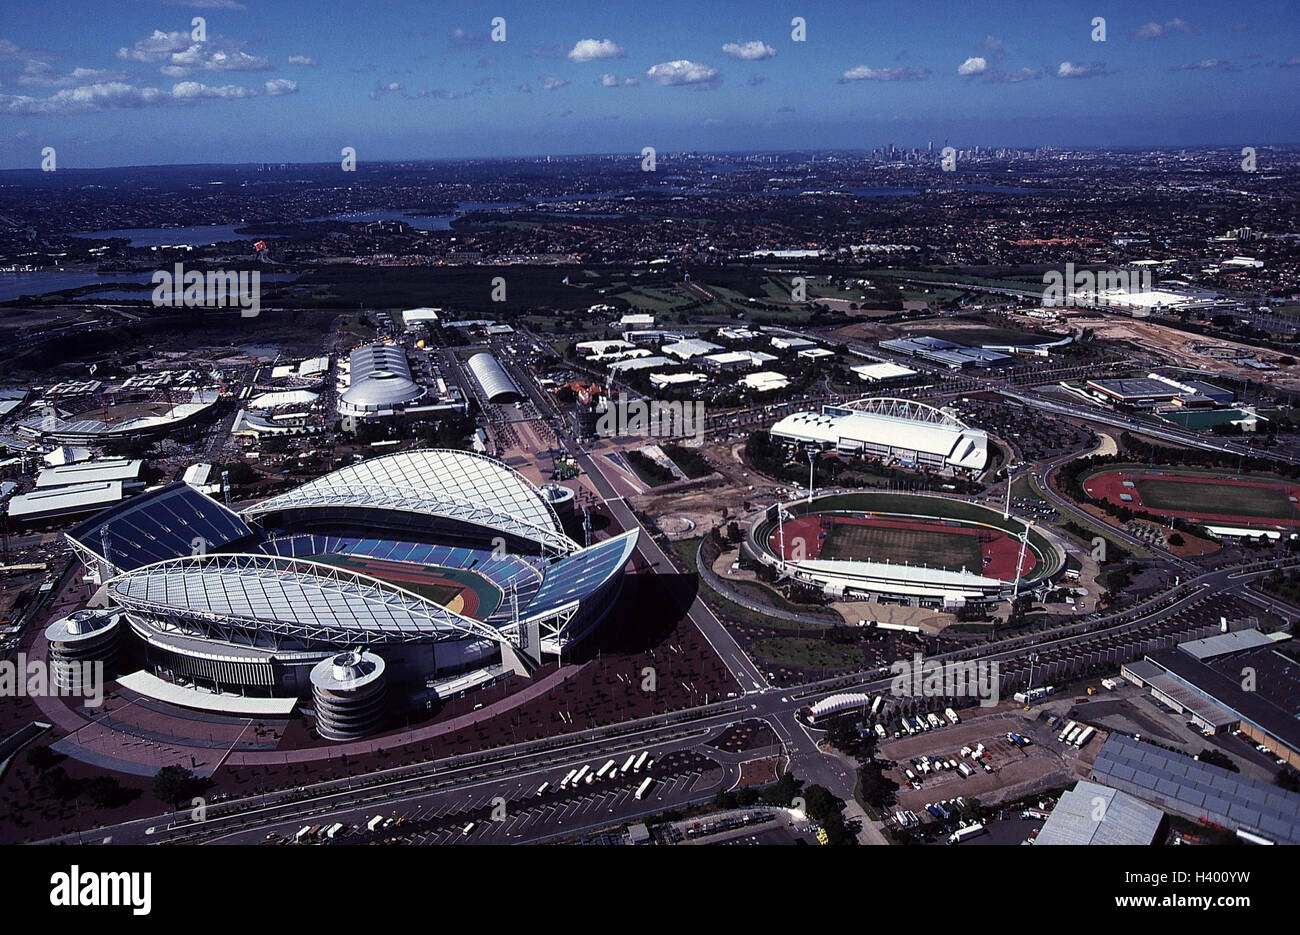 Australien, Sydney Olympic komplexe, Luftbild Aufnahmen, Homebush Bay Gegend, Olympia, Olympiastadion, Stadtübersicht, Übersicht Stockfoto